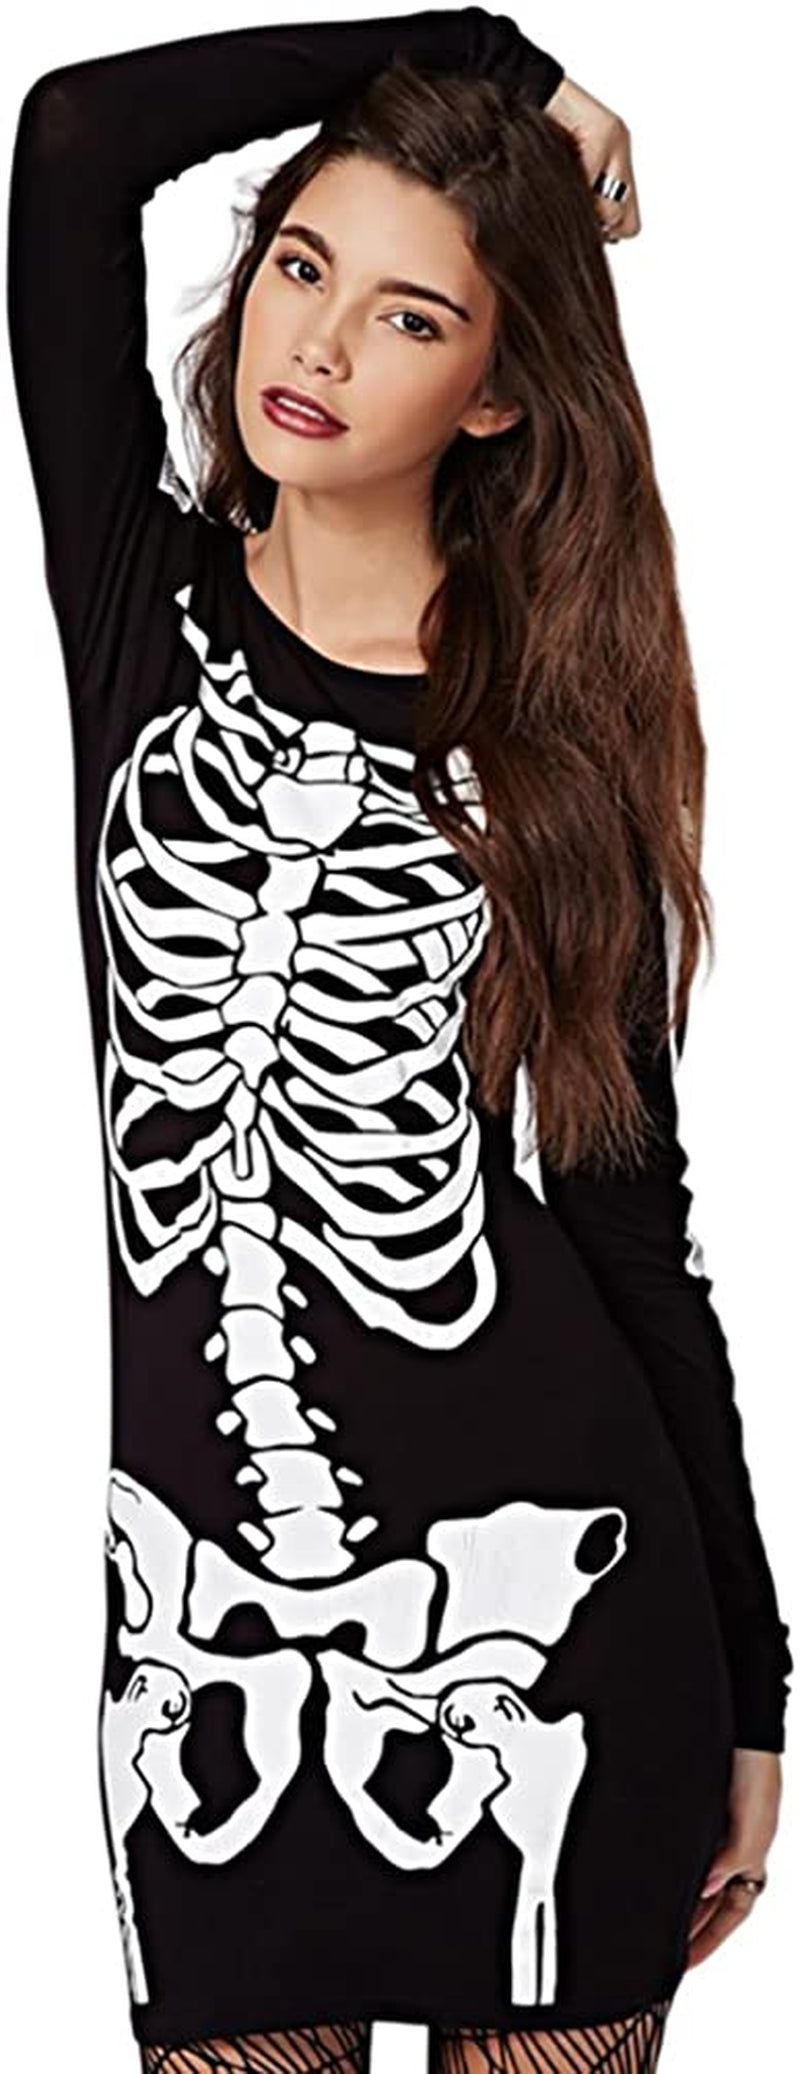 Rieket Women'S Halloween Costume Skeleton Dress Long Sleeves Stretchy Short Mini Dress  RieKet   